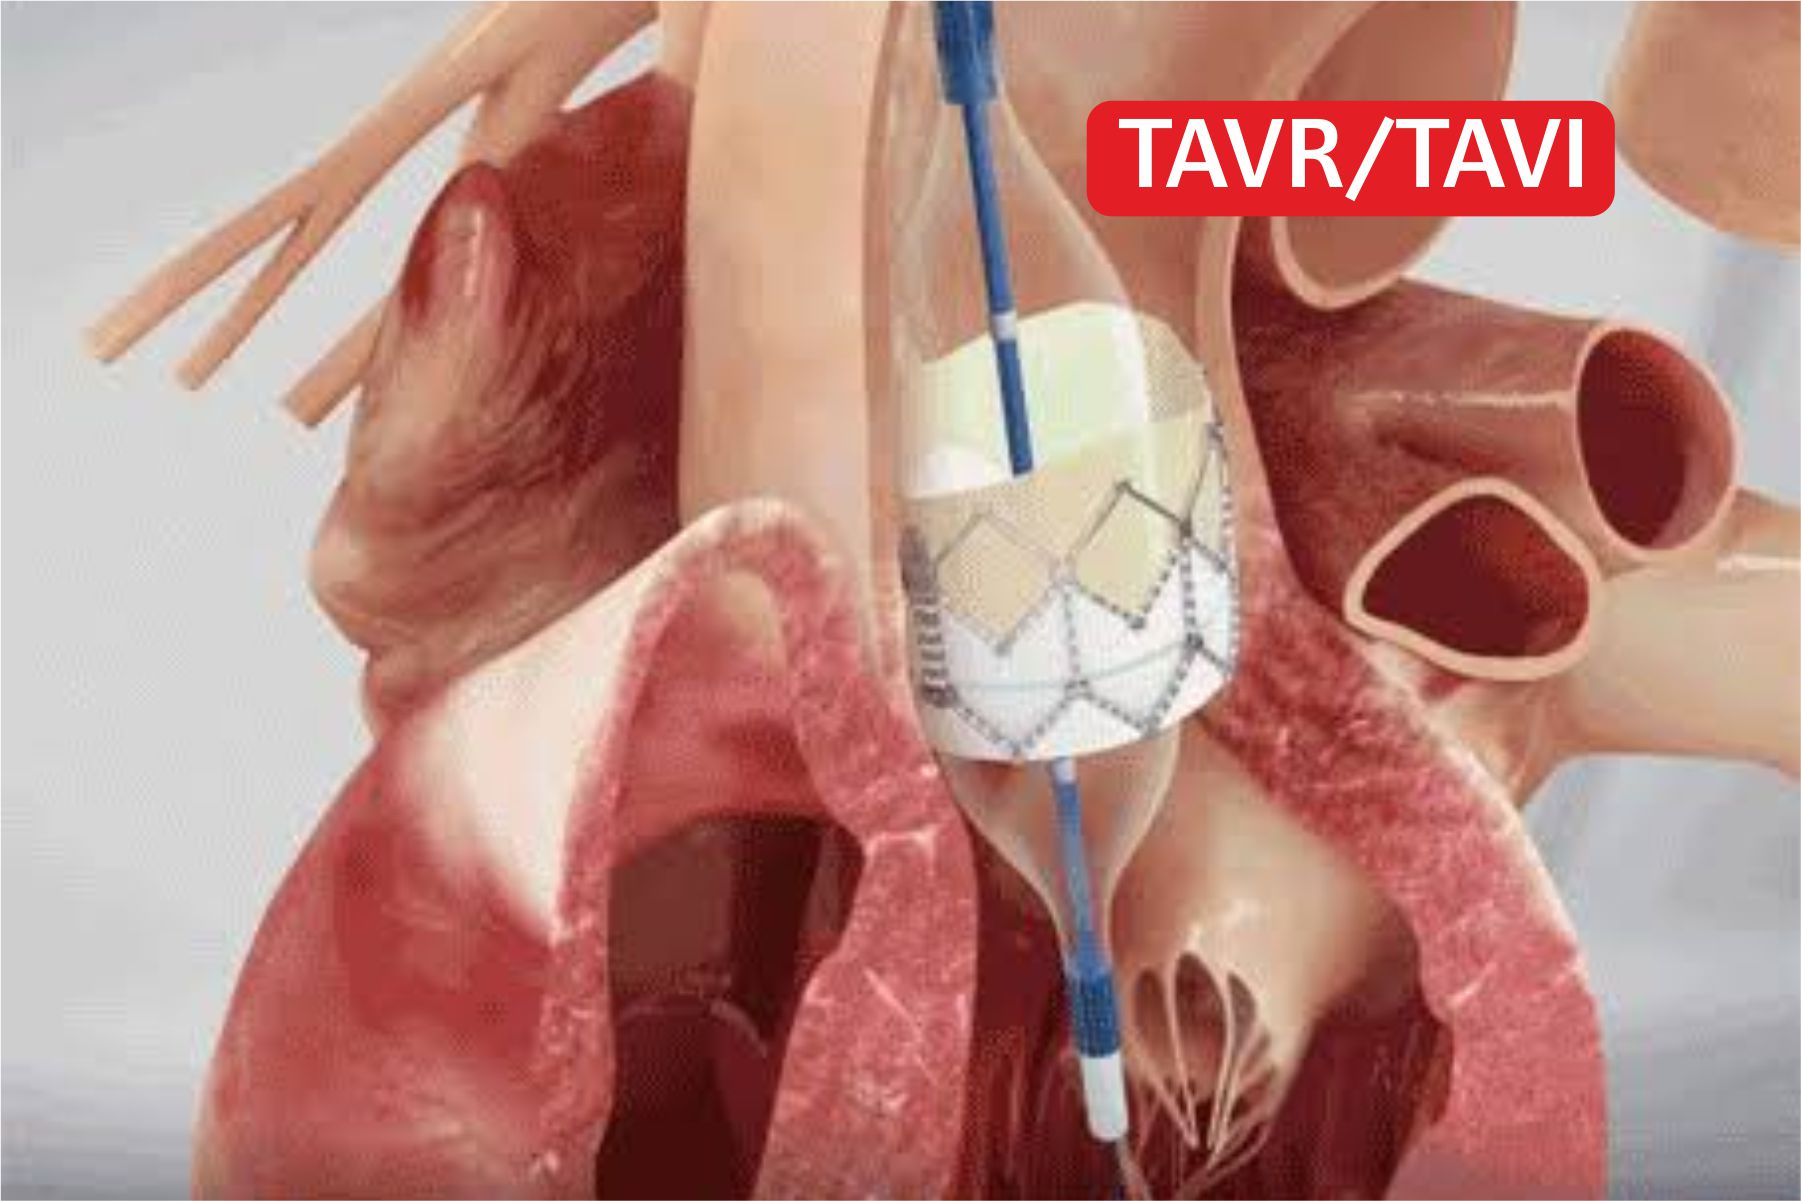 Arneja Hospital - TAVR/TAVI 